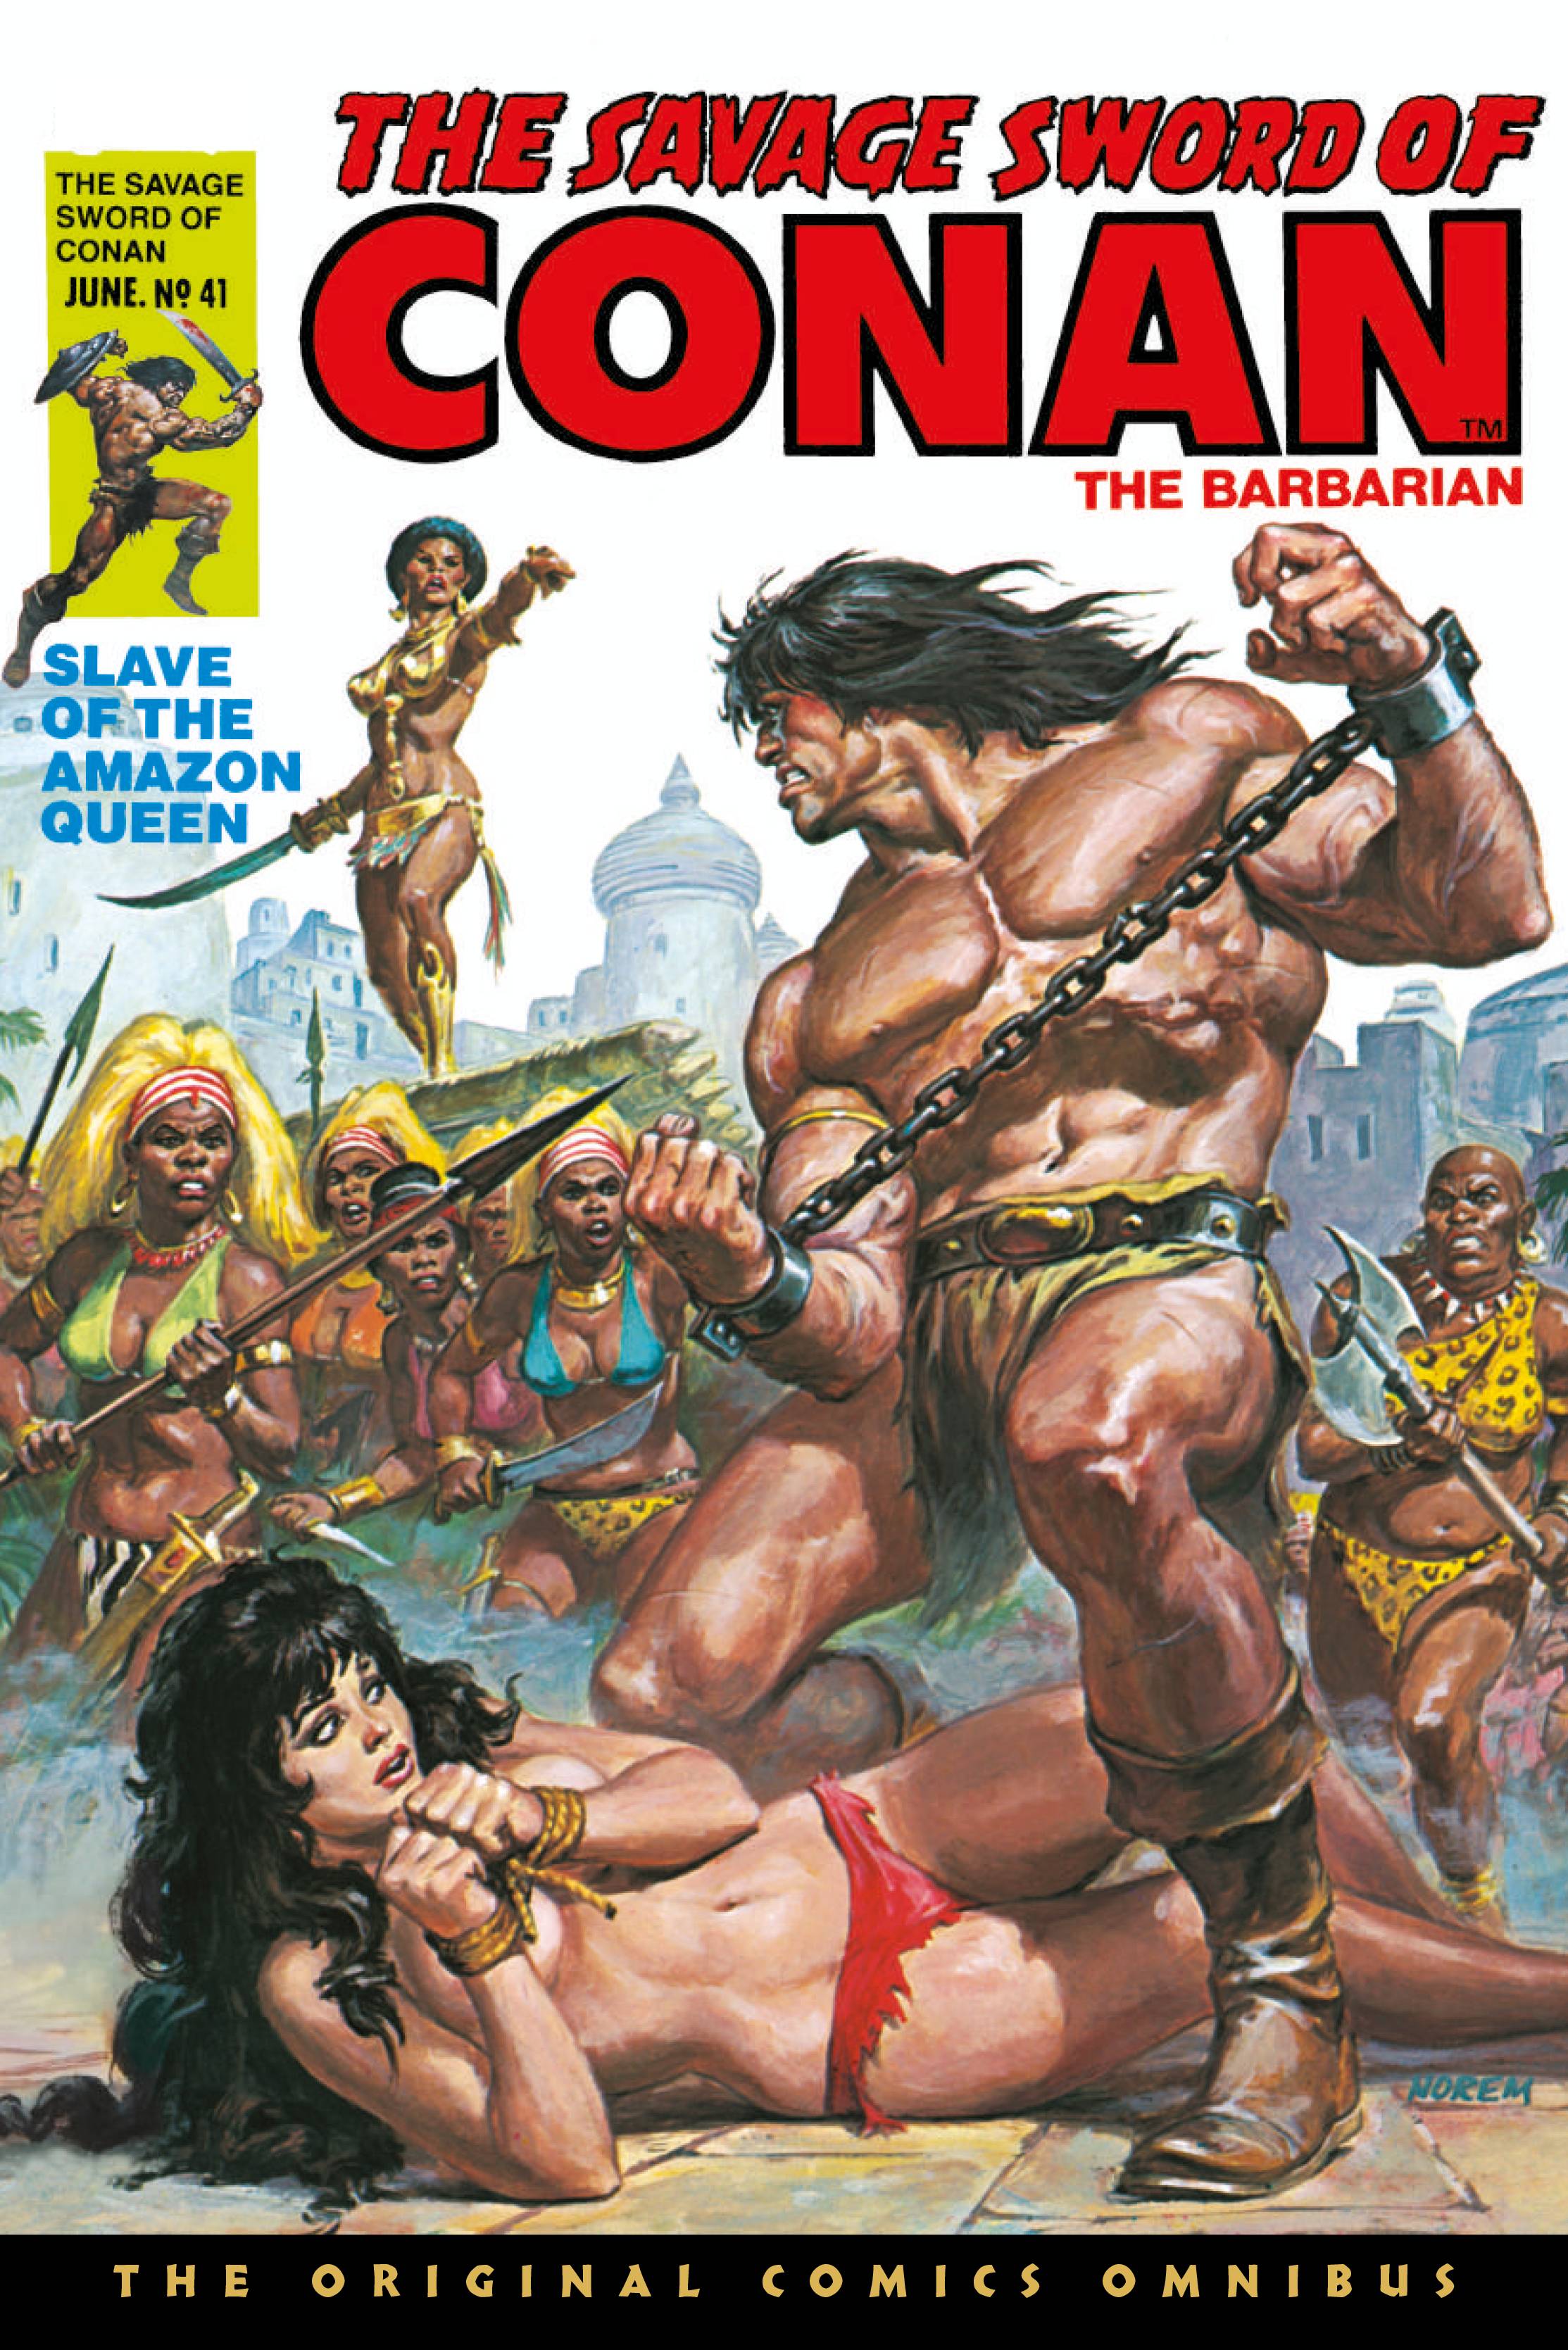 The Savage Sword of Conan: The Original Comics Omnibus Vol.3 HC DM Variant *PRE-ORDER*